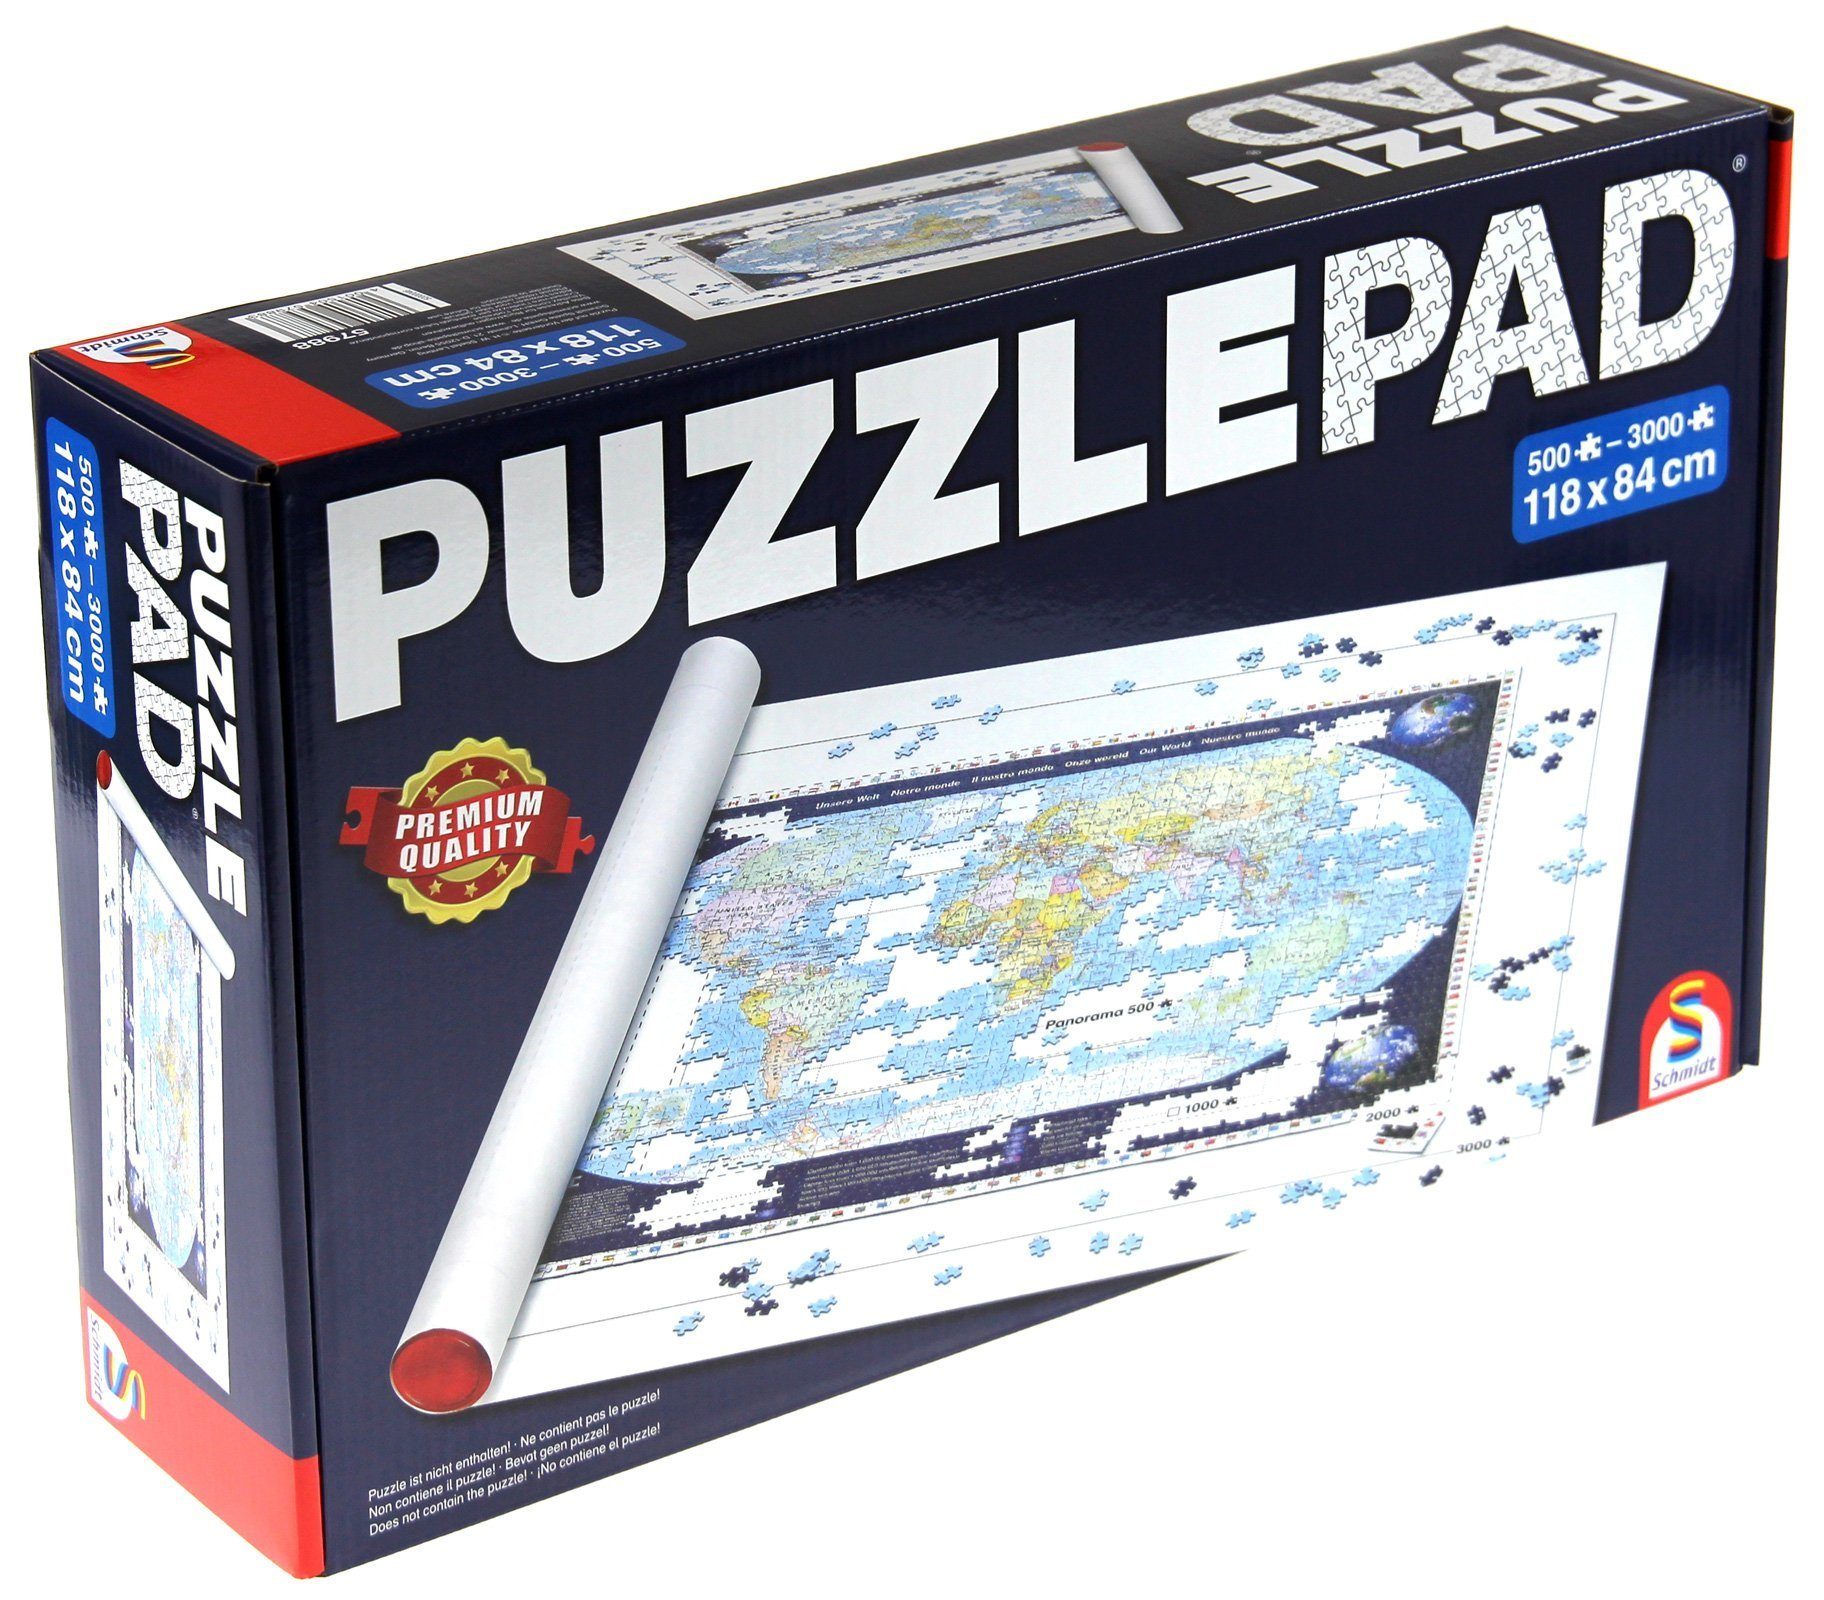 Puzzle Puzzle Roll Mat up to 3000 pieces Schmidt